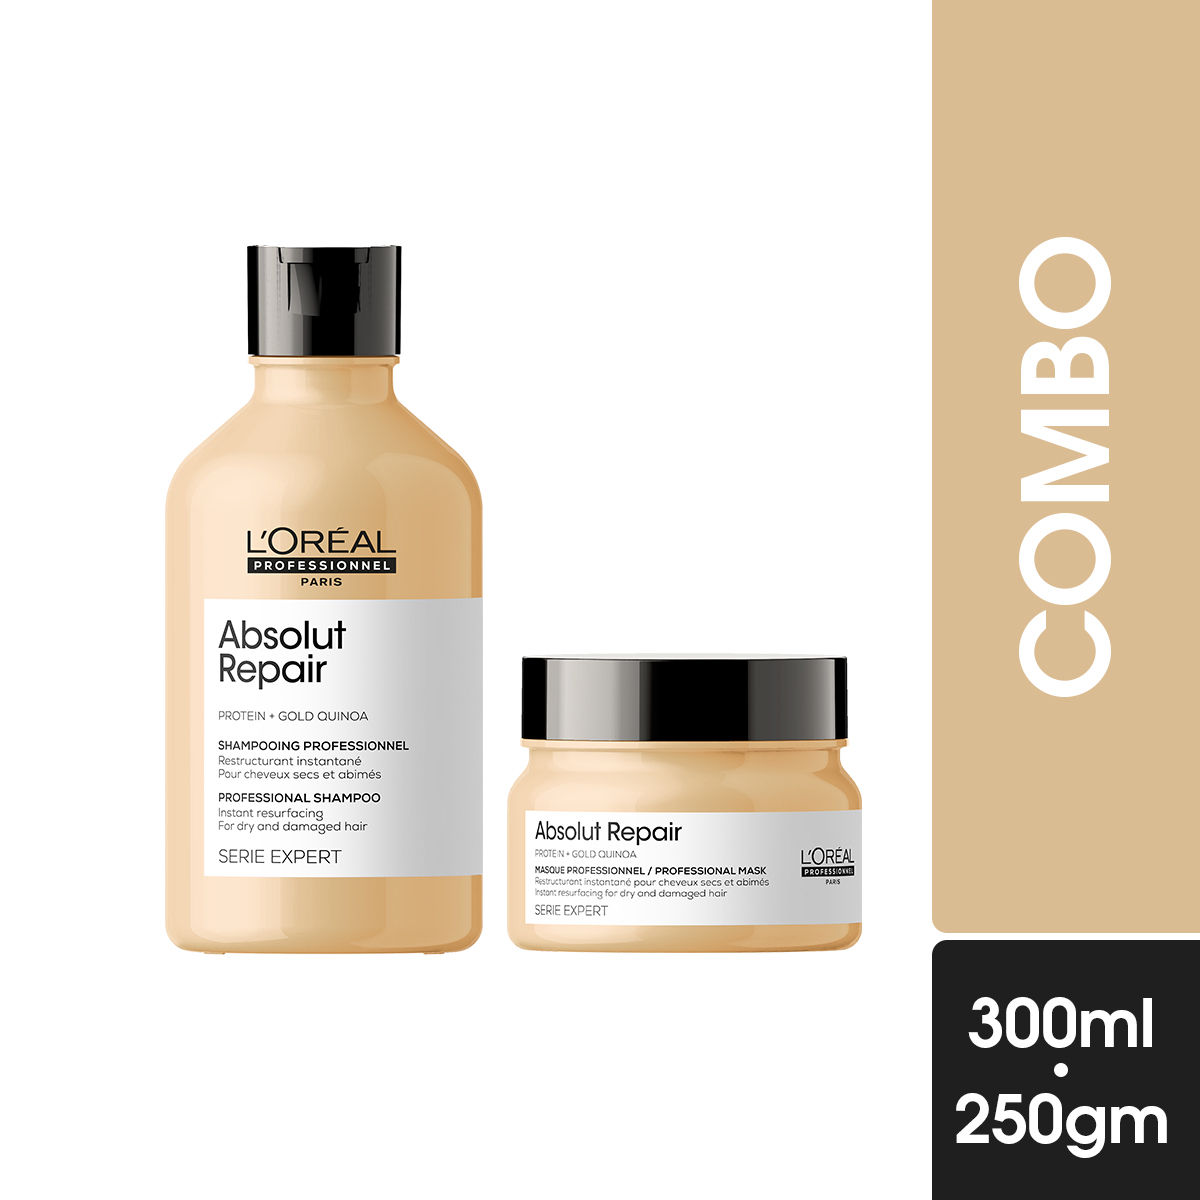 L'Oreal Professionnel Absolut Repair Shampoo 300ml & Hair Mask 250gm Combo, Serie Expert